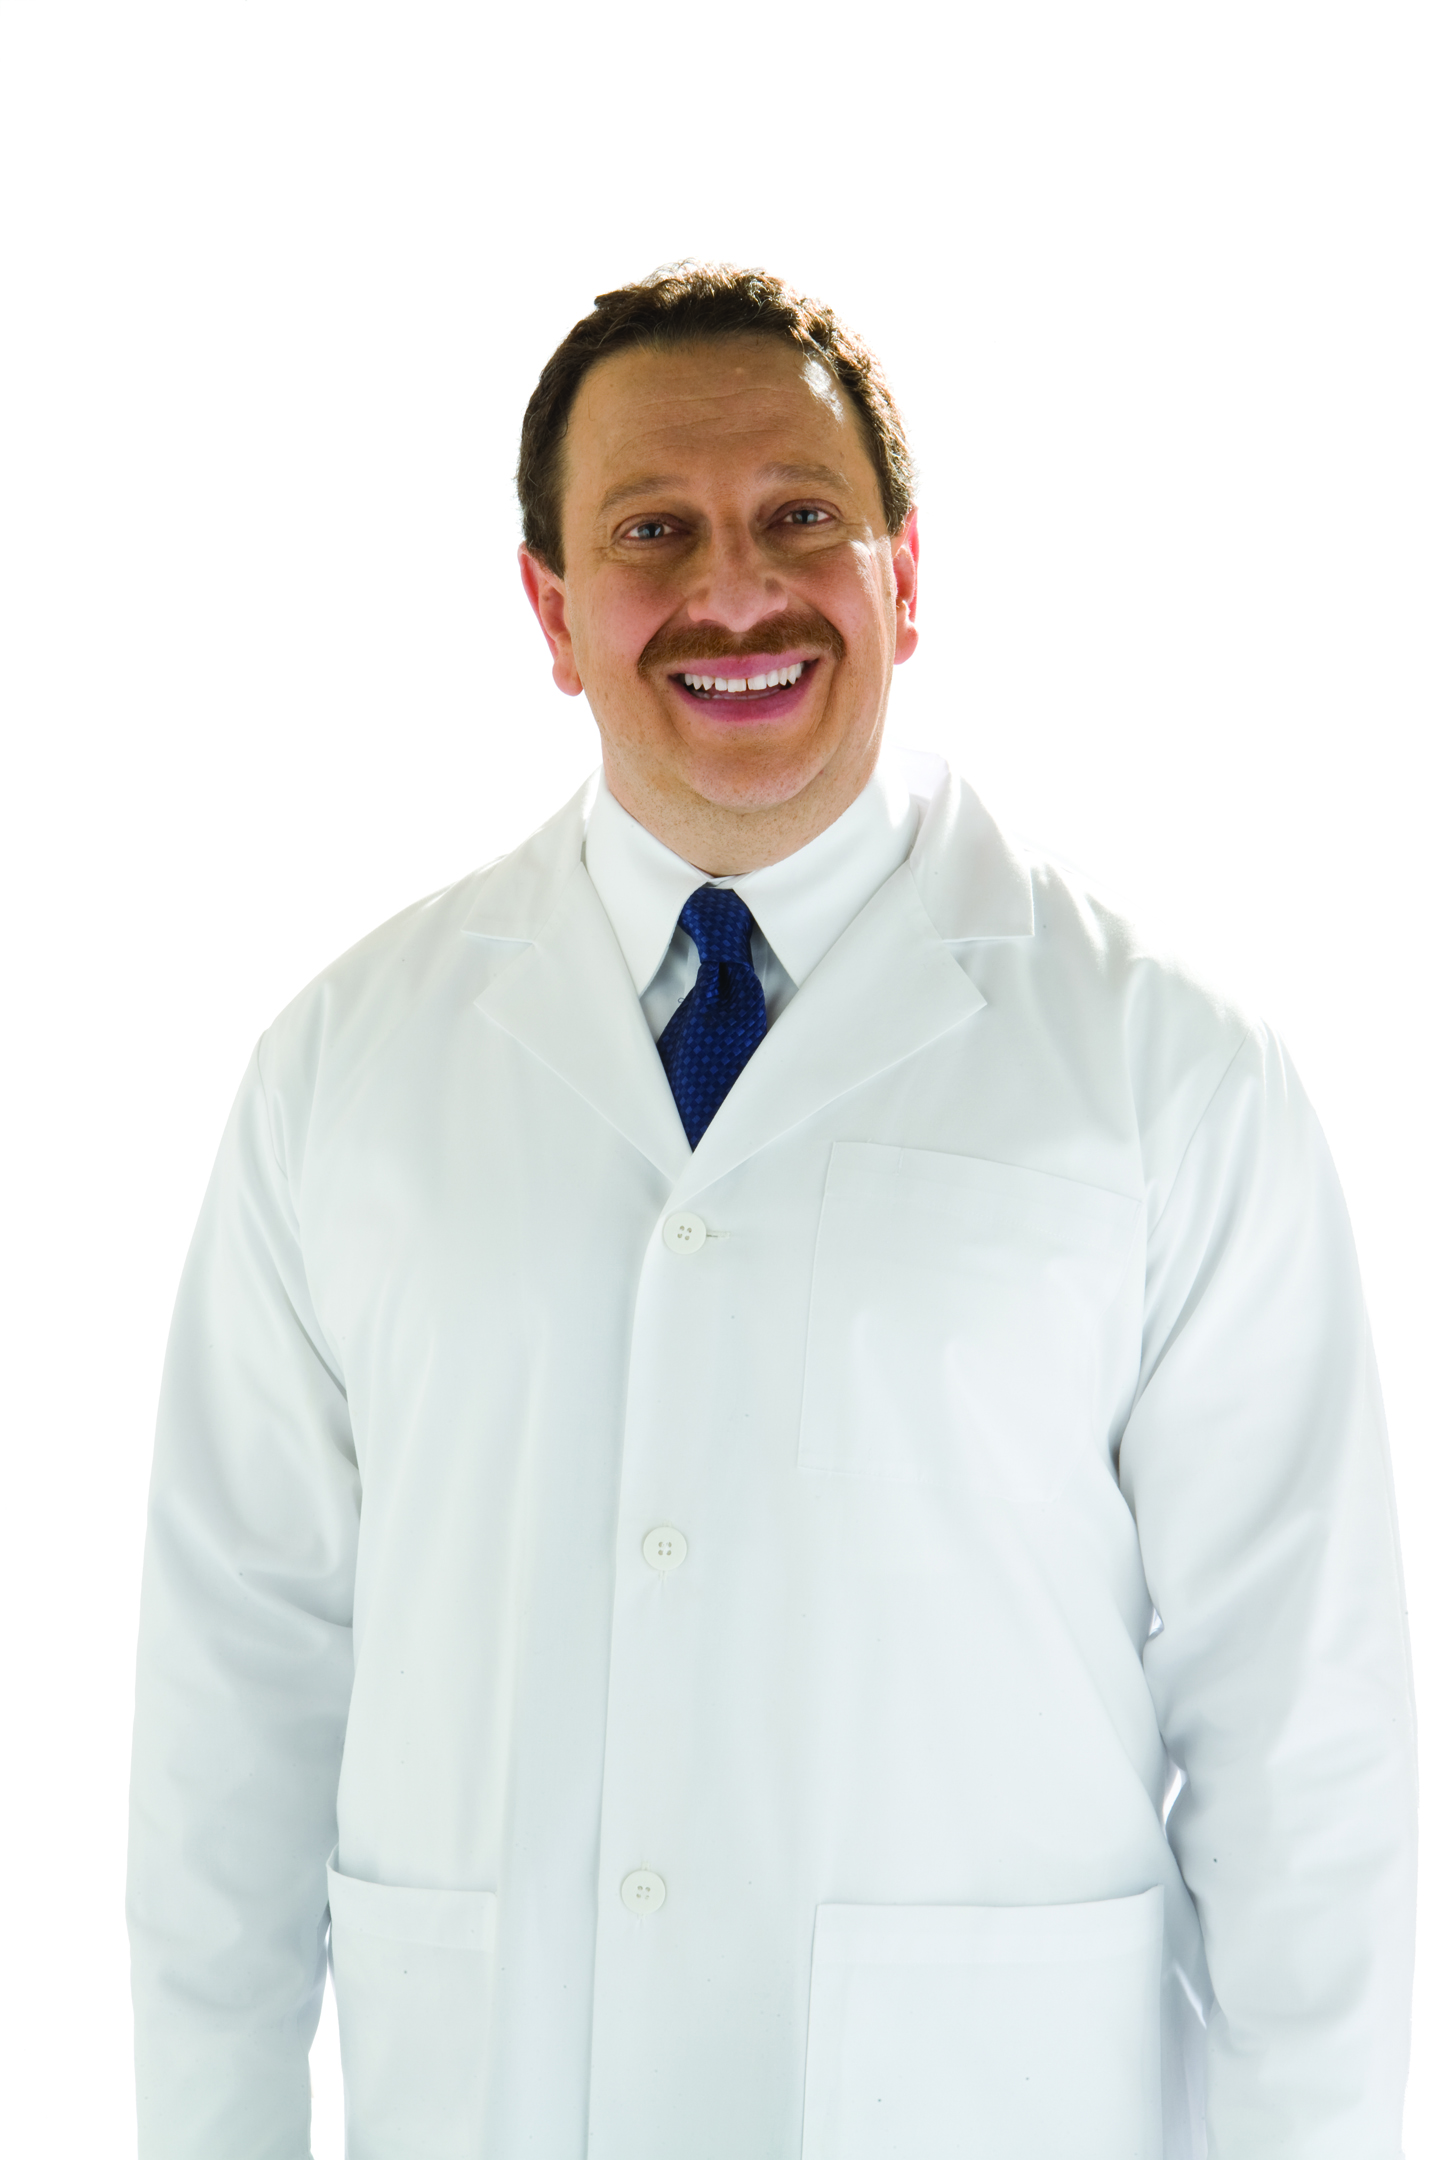 LASIK and Cataract Surgeon Dr. Jeffrey Robin'